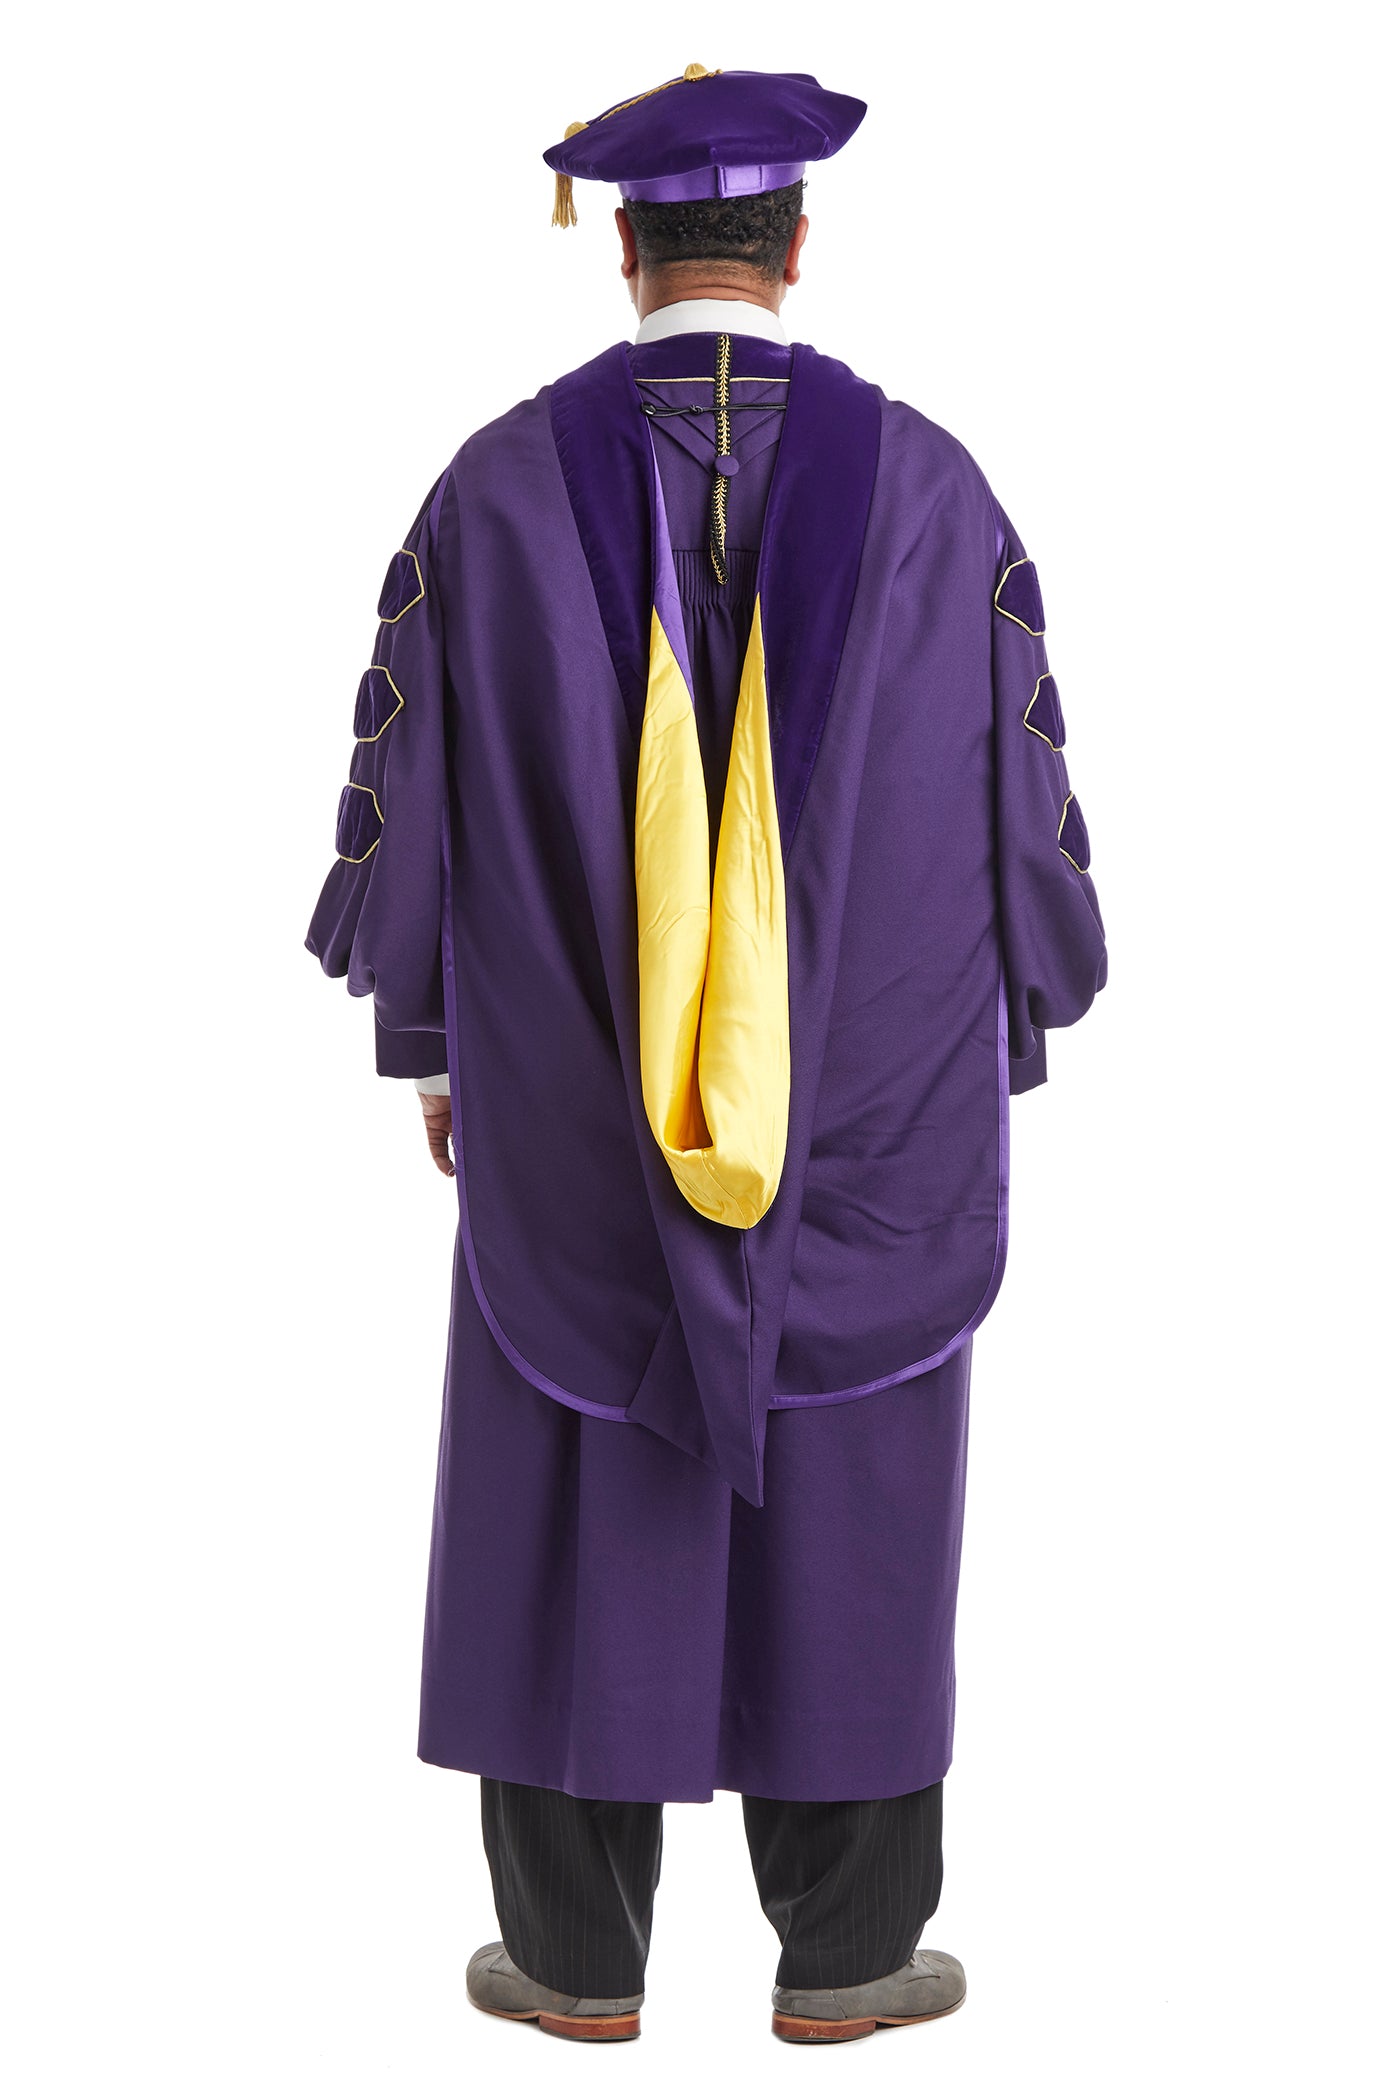 Doctoral Graduation Gown for Graduation| Alibaba.com